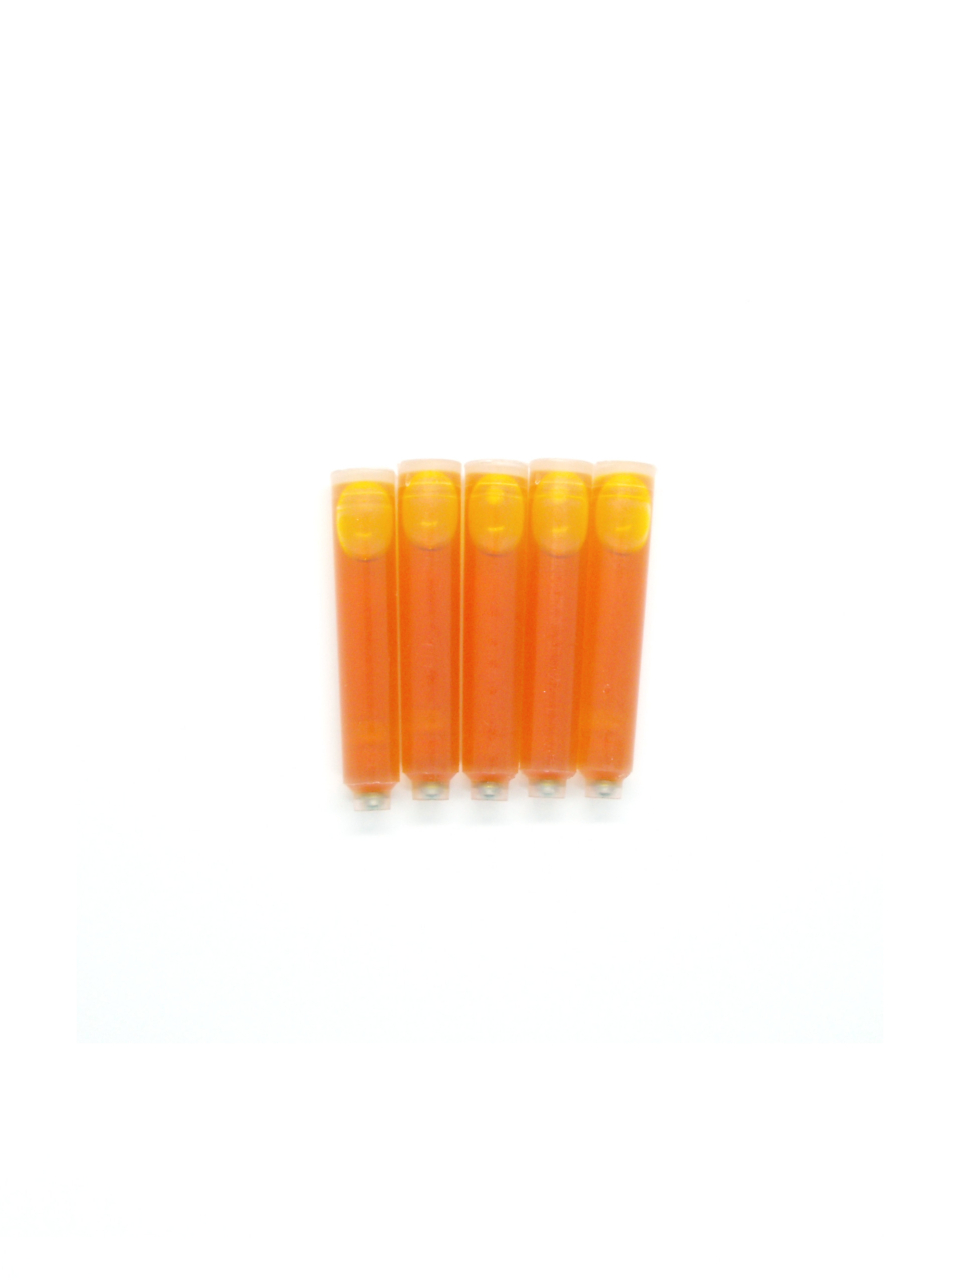 PenConverter Ink Cartridges For Eboya Fountain Pens (Yellow)